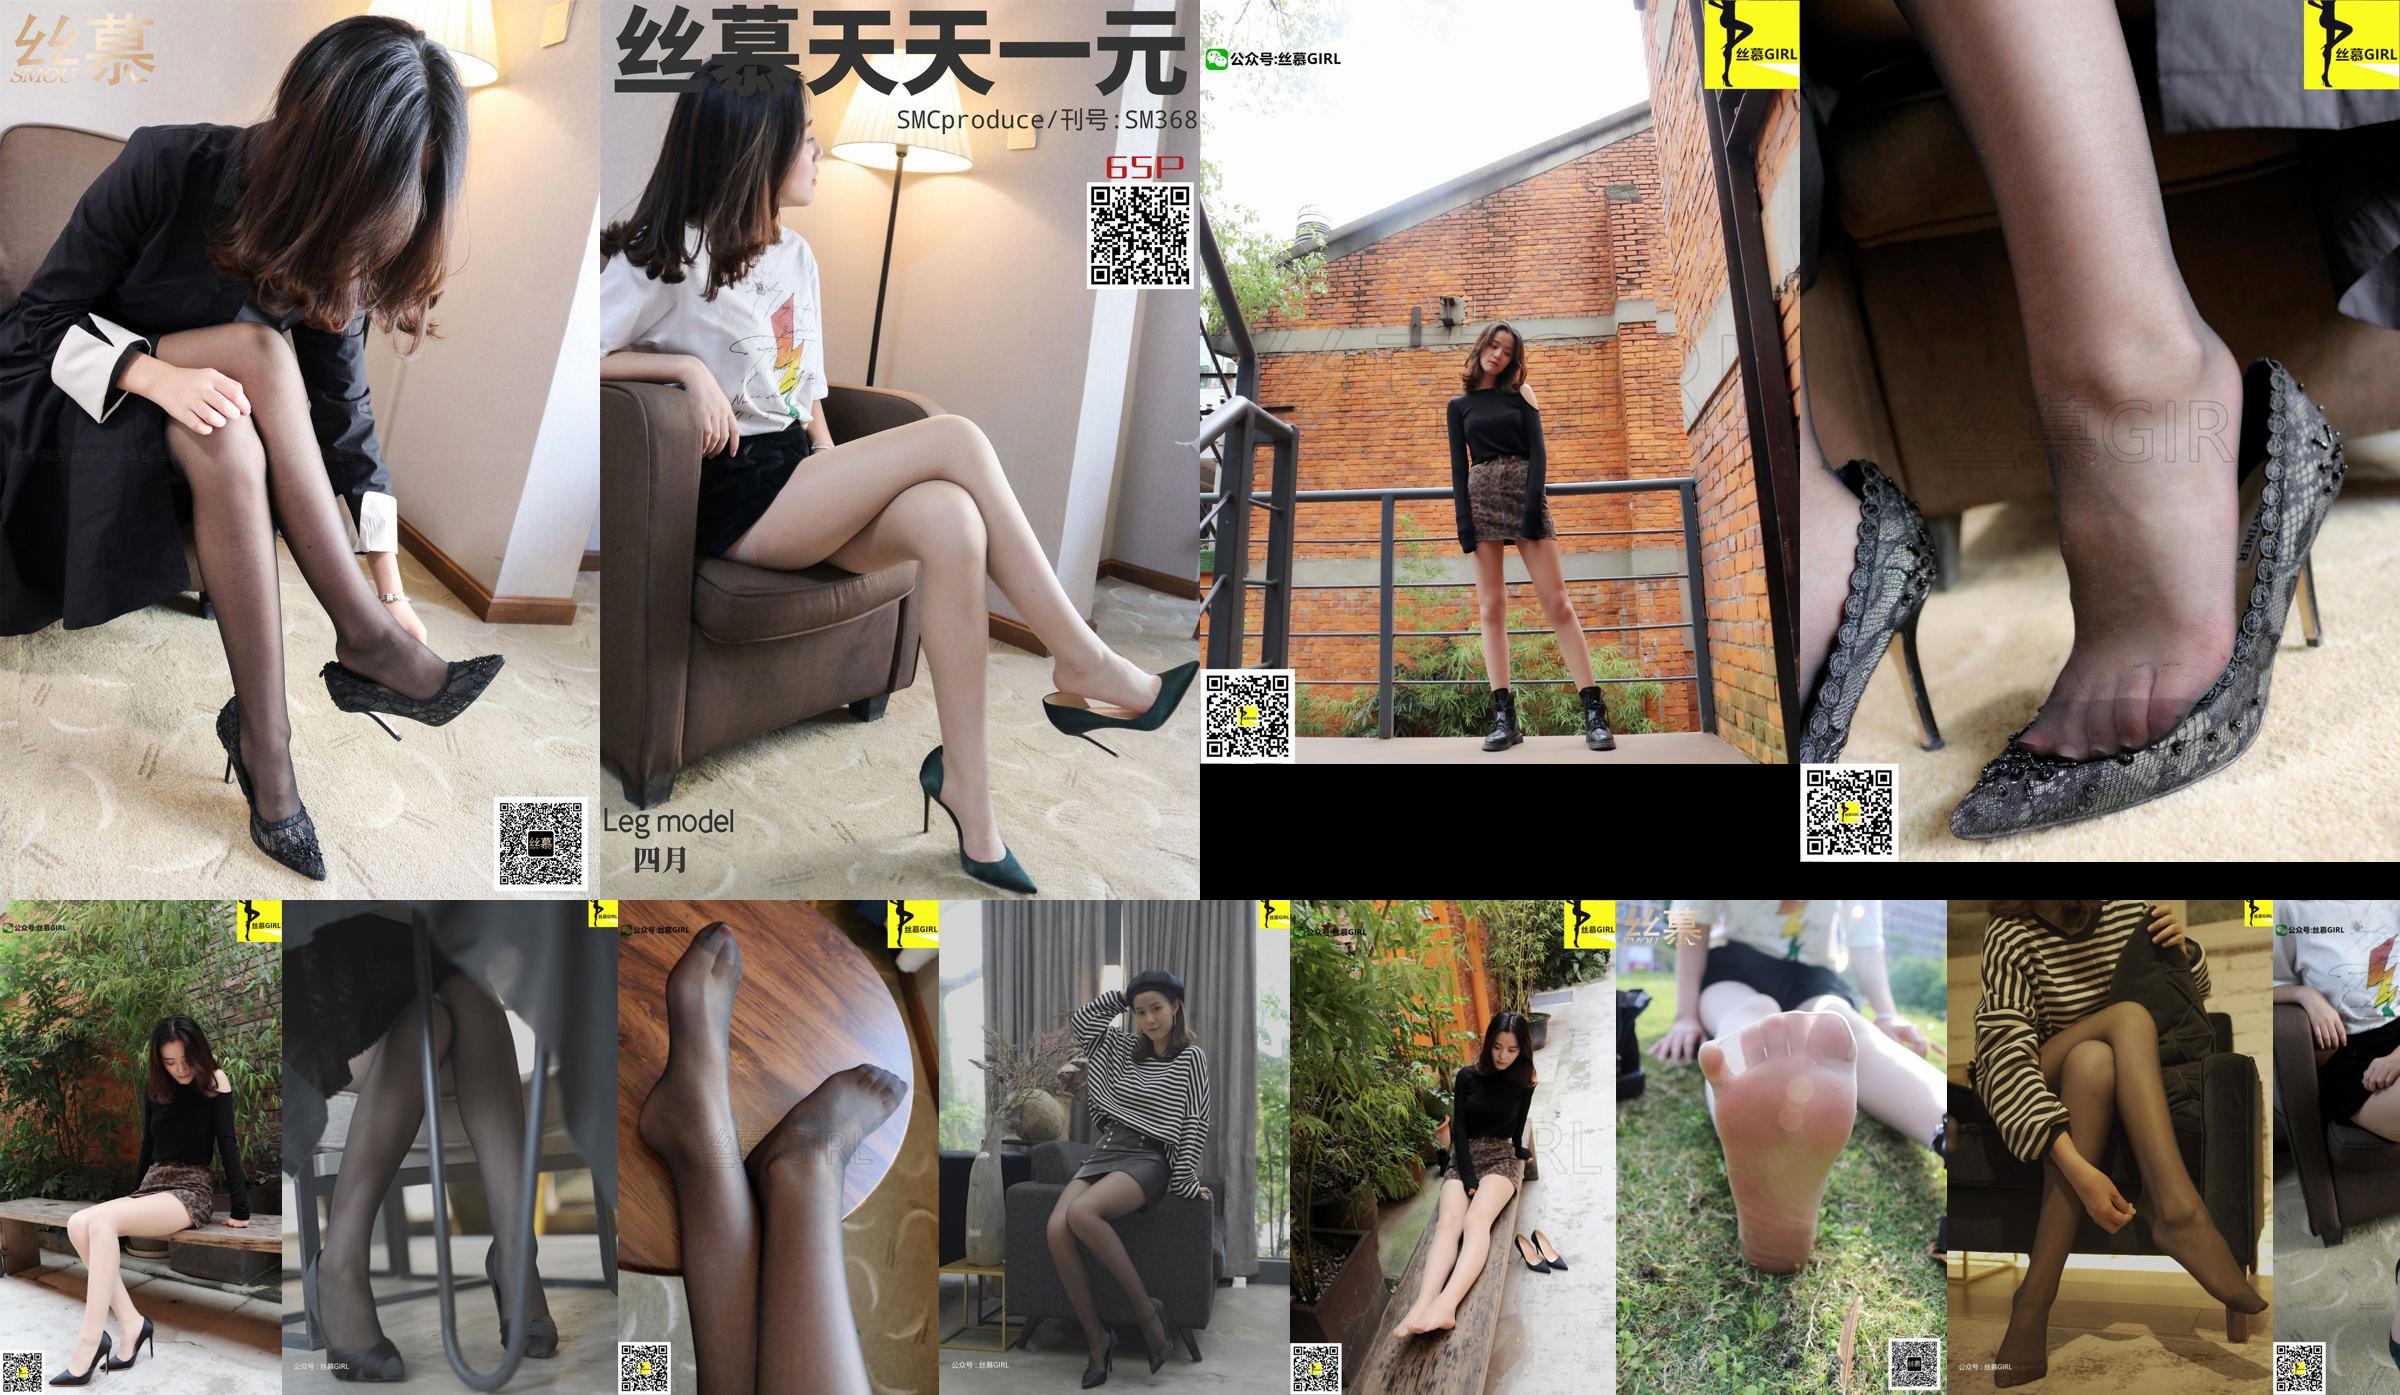 [Simu] SM368 Every Day One Yuan April "Double Silk Review" No.1901e1 Trang 1